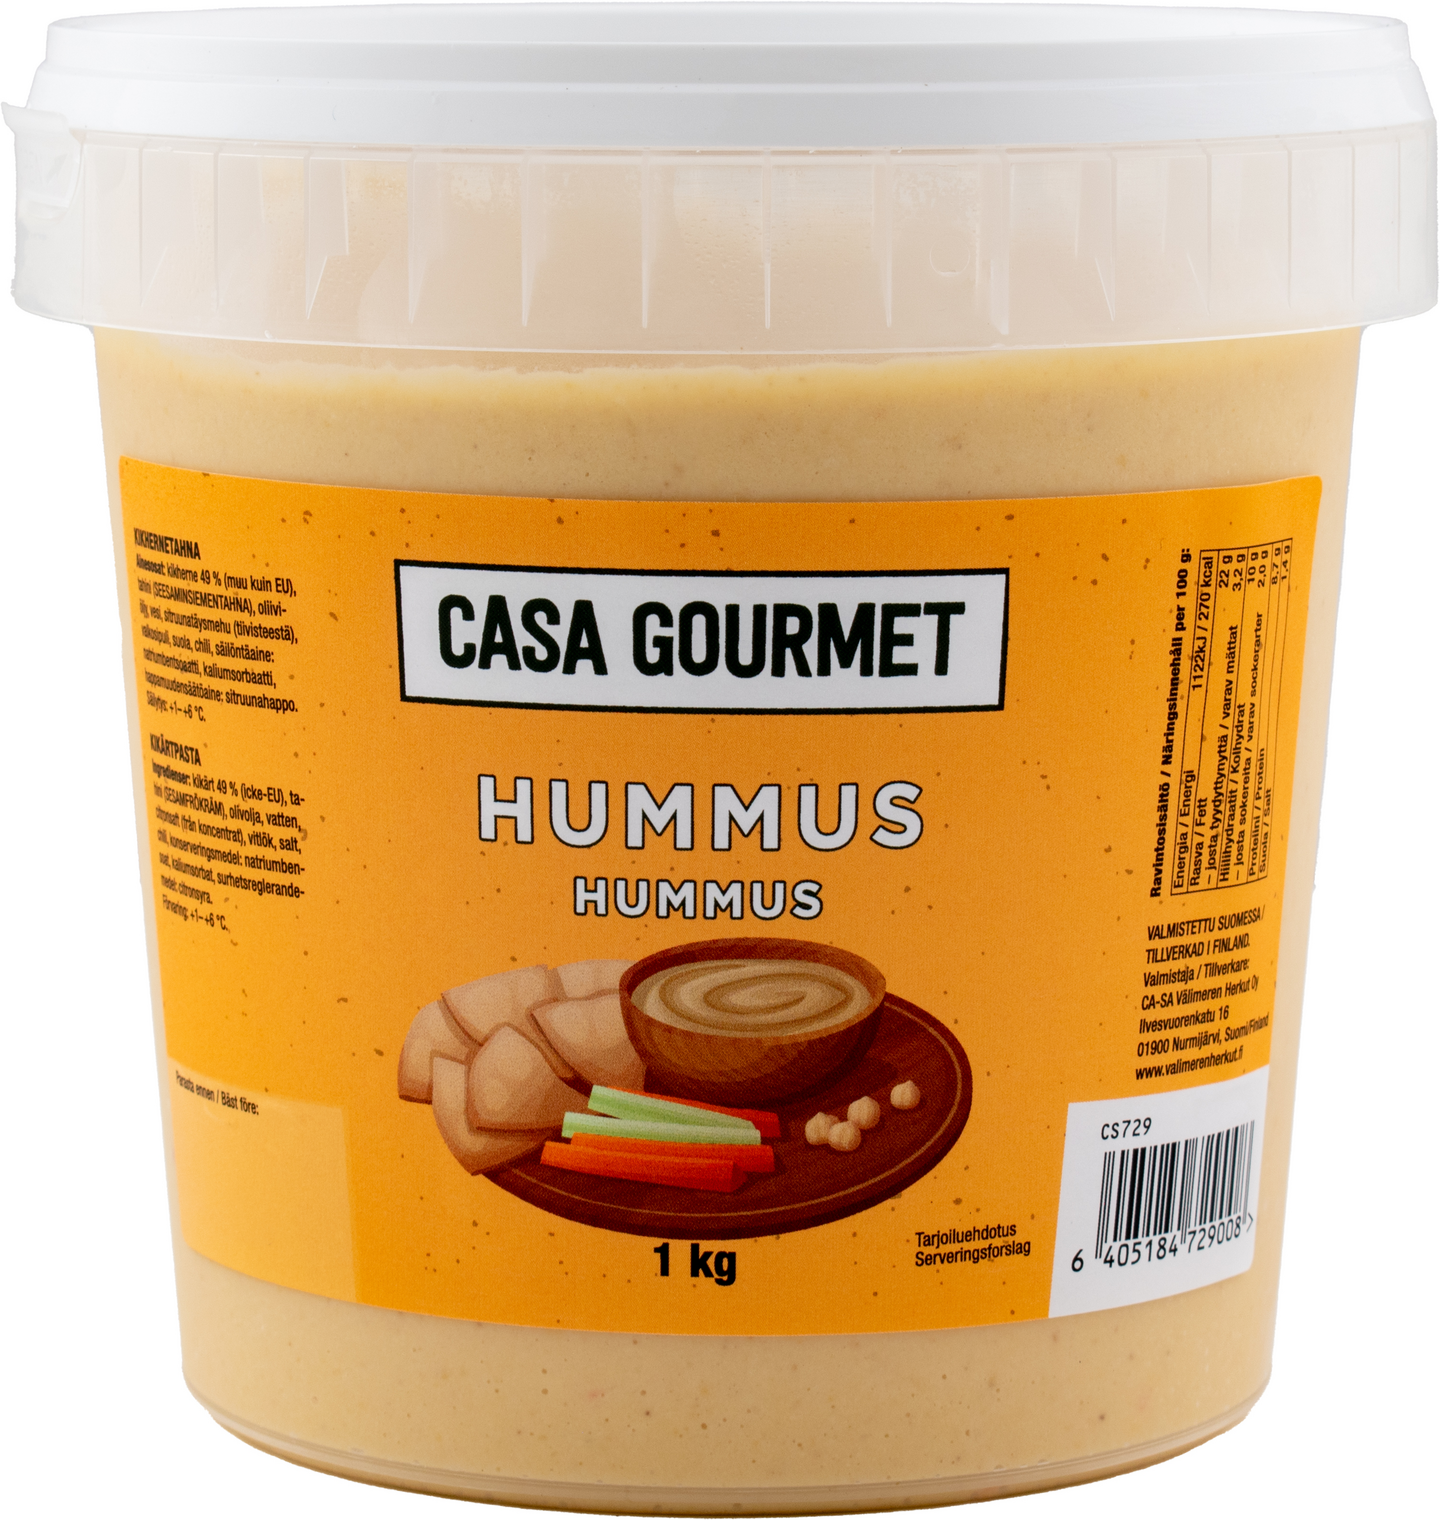 Casa Gourmet hummus 1kg